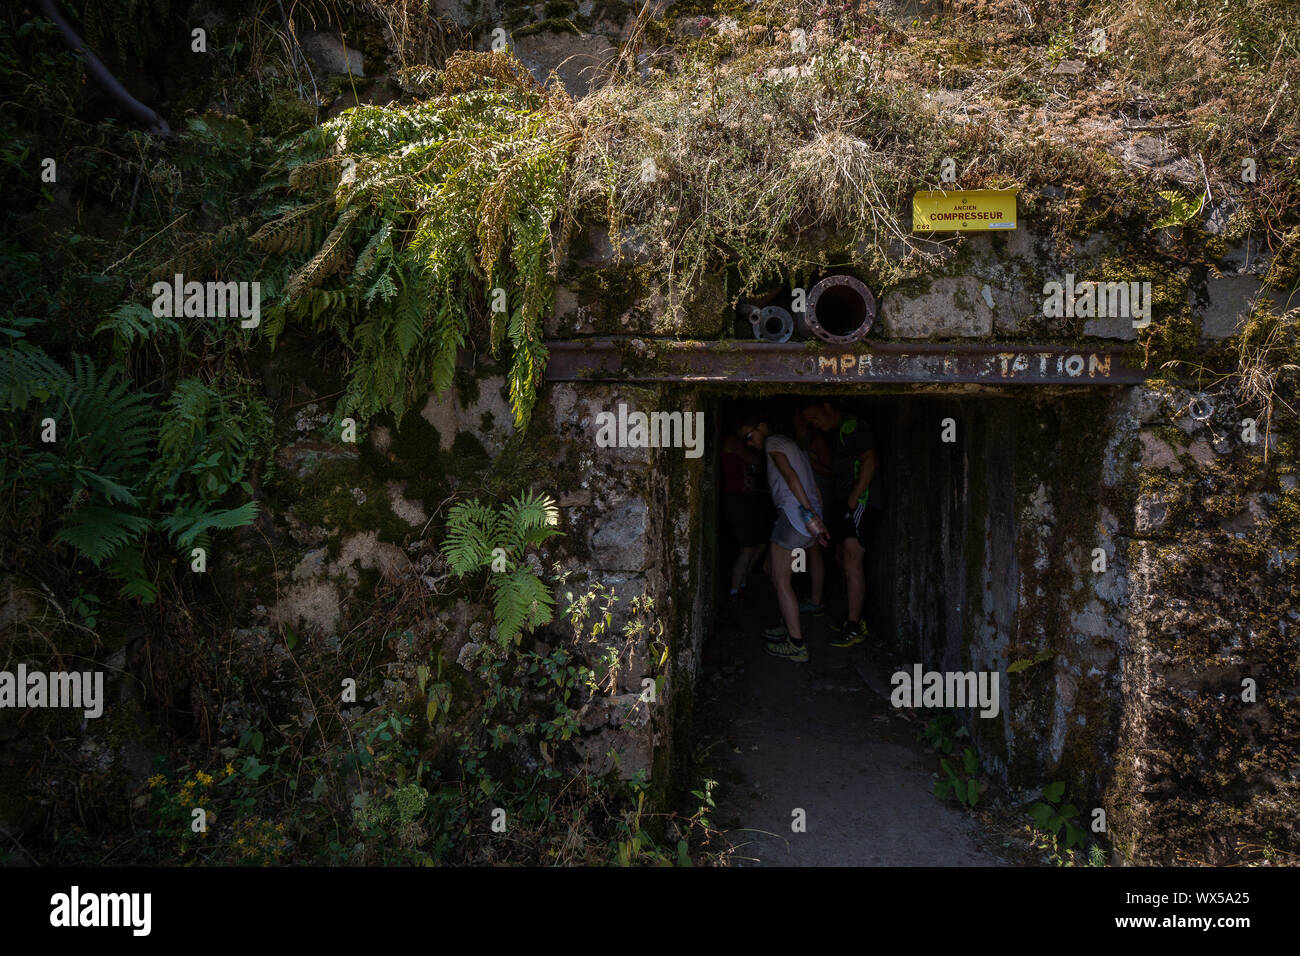 Alsace Mountain vogesen guerra mondiale una memorial rovine Foto Stock